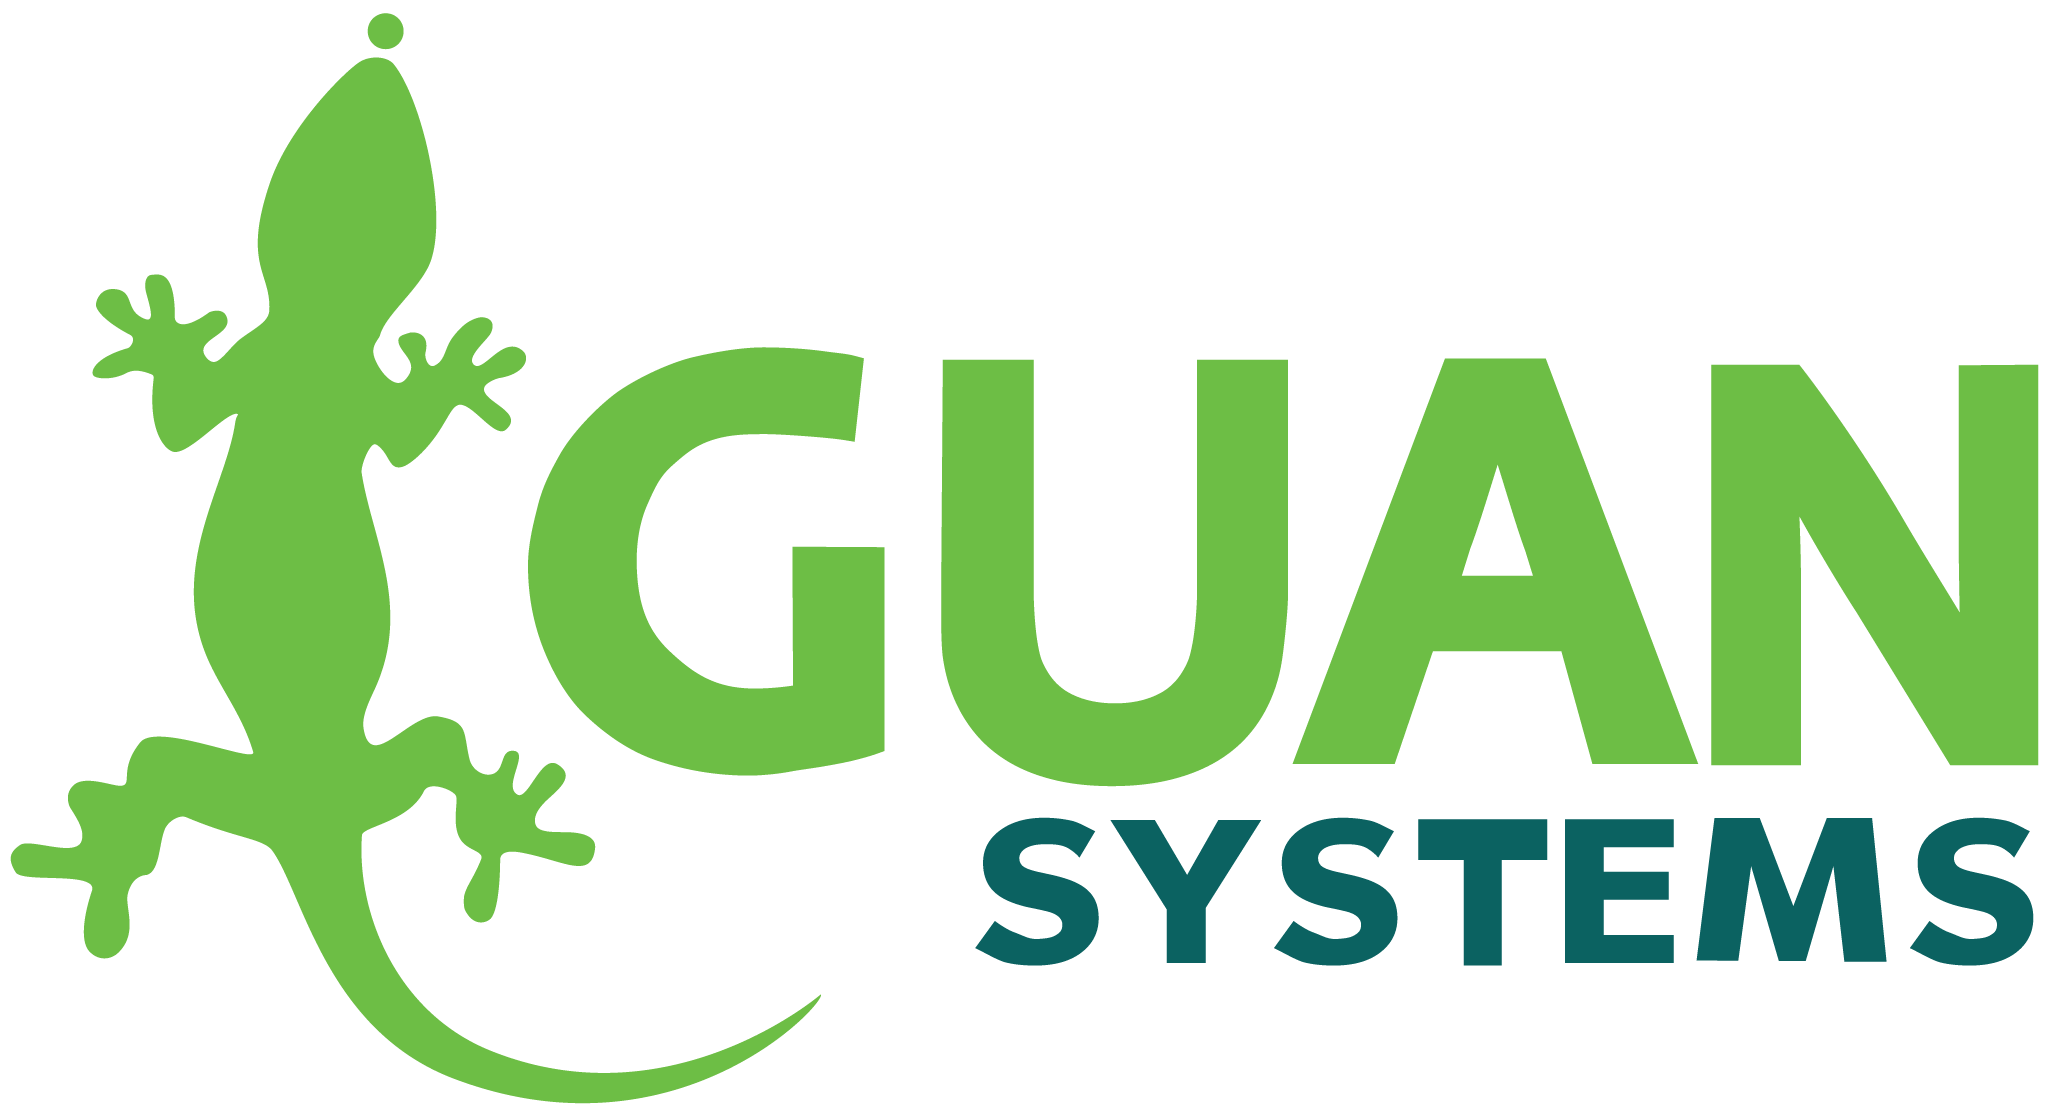 Iguan Systems